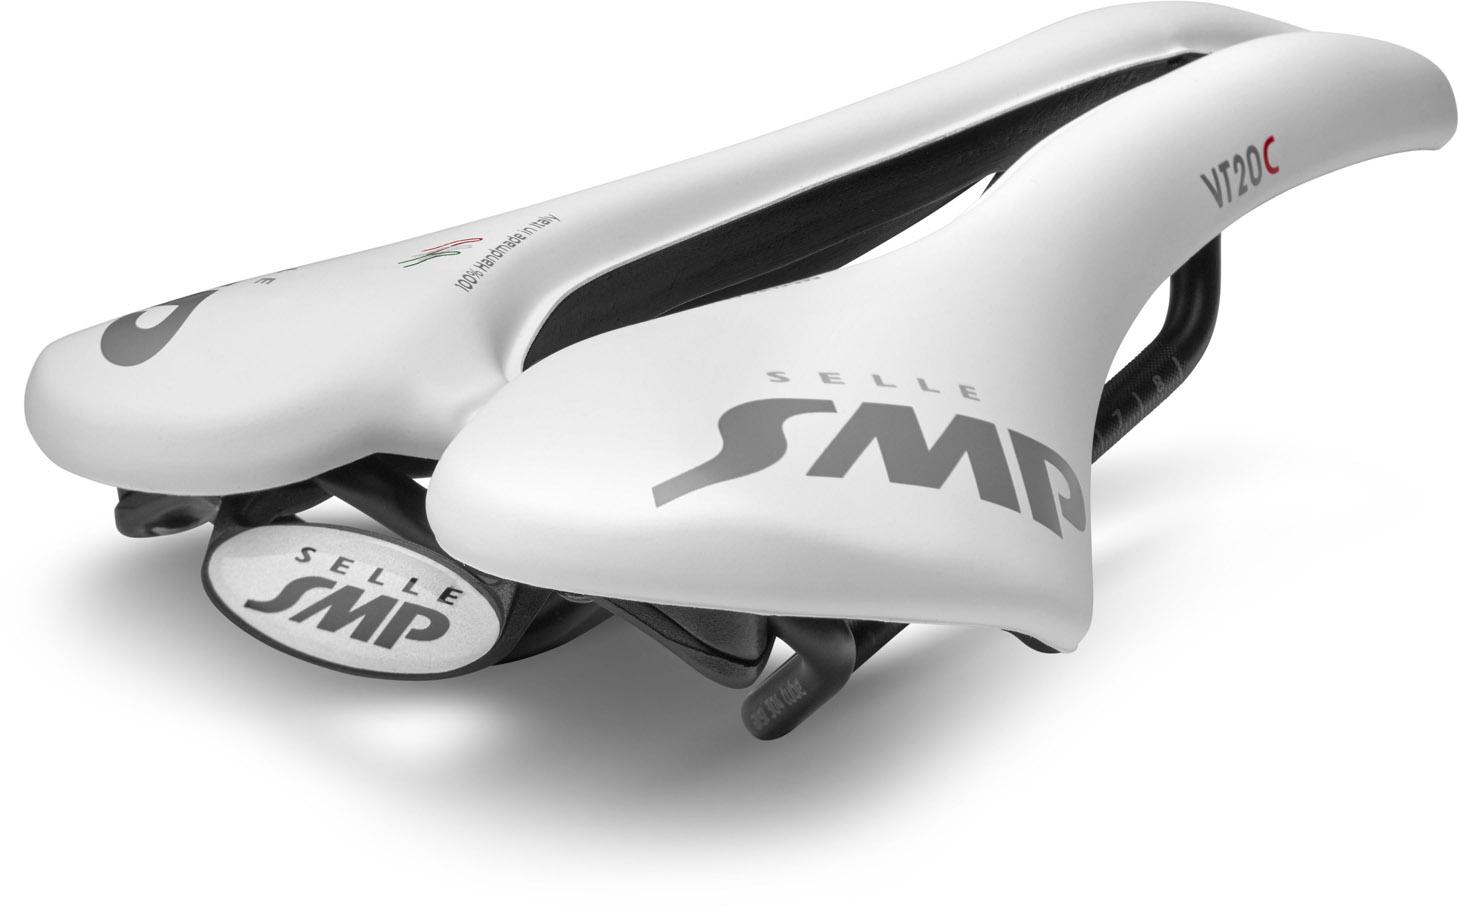 Selle Smp Vt20 C Sport Saddle - White